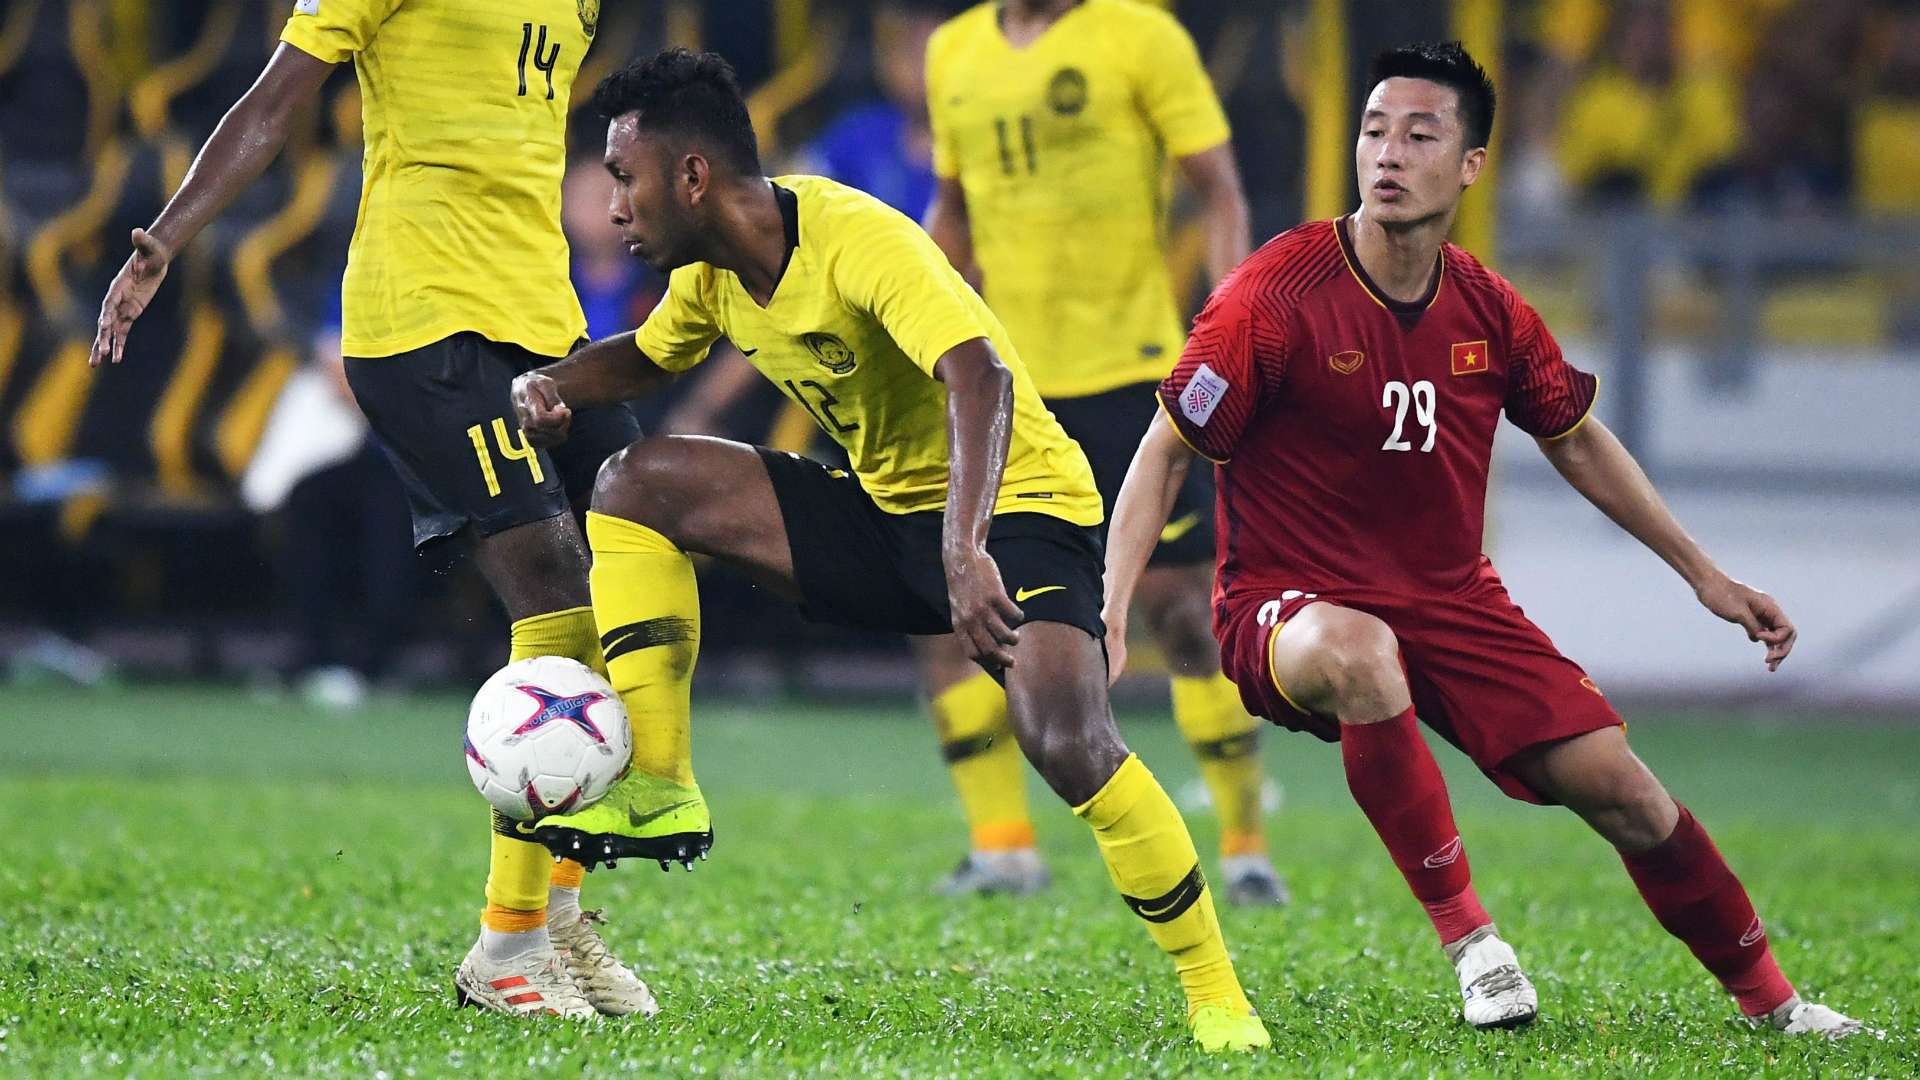 Akram Mahinan, Malaysia v Vietnam, 2018 AFF Suzuki Cup